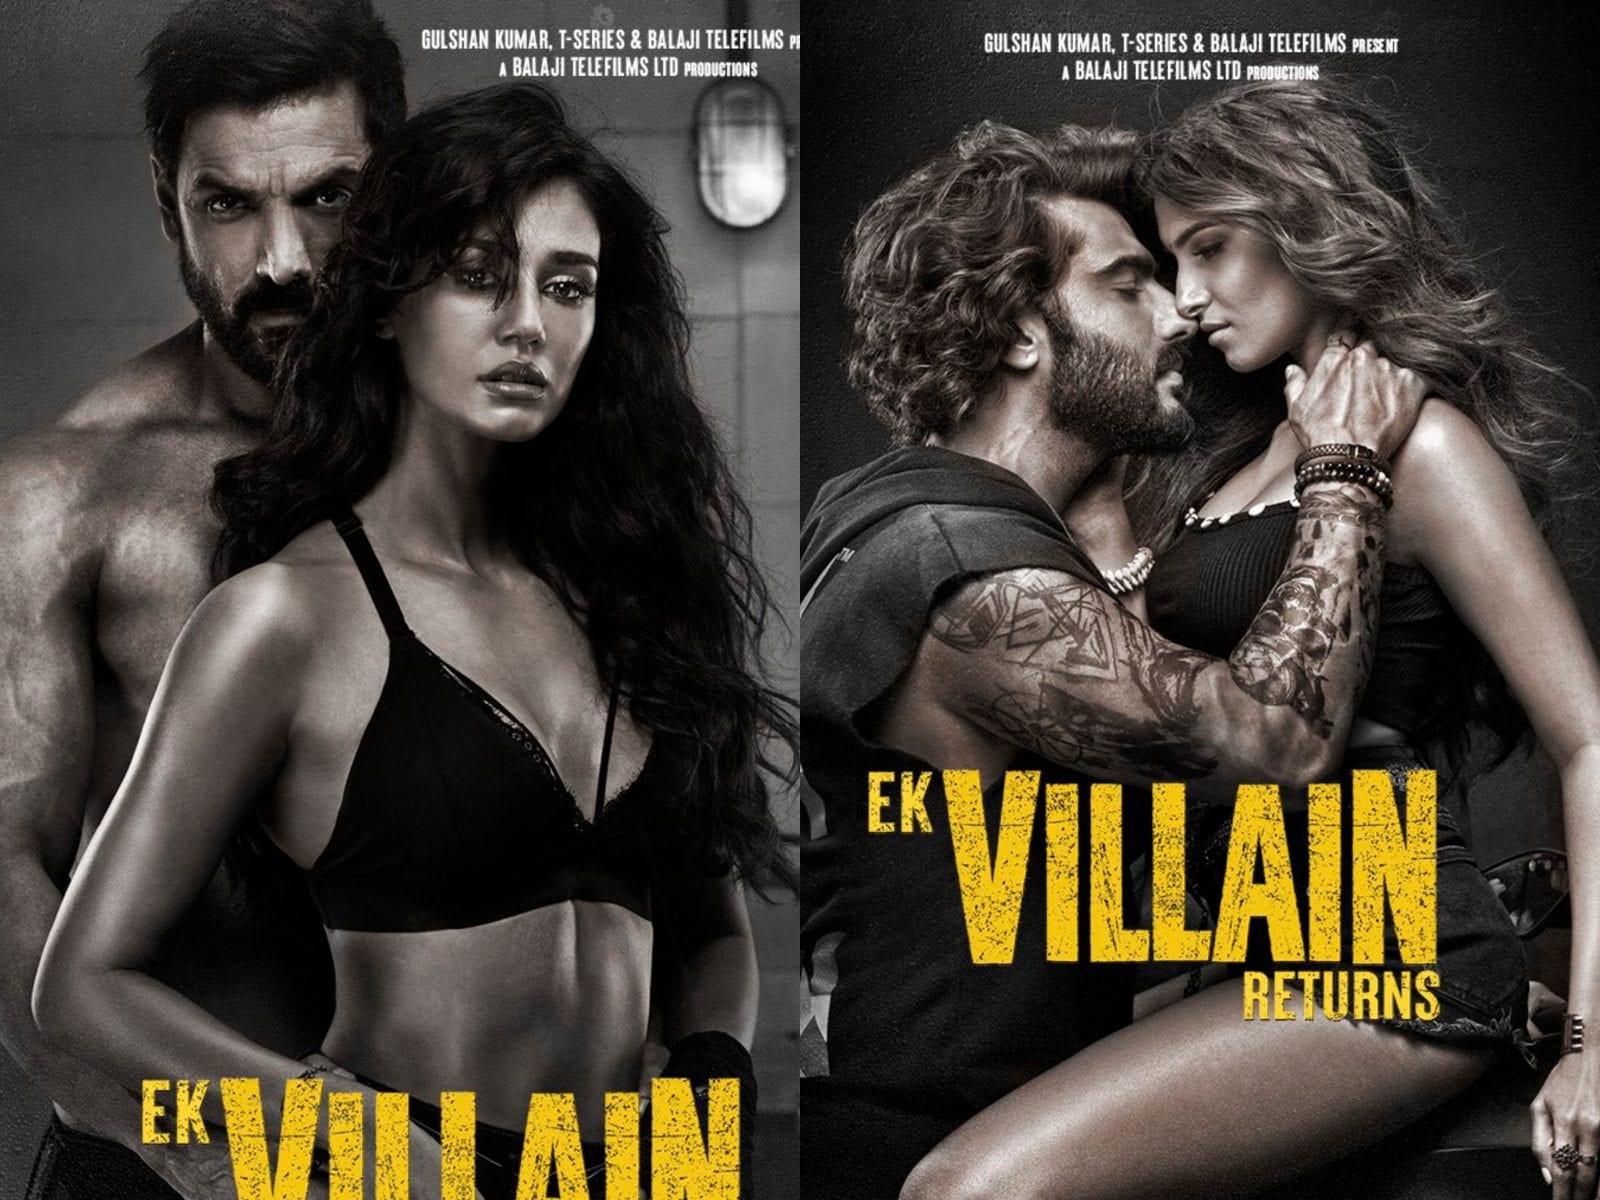 Ek Villian Serial Killer Movies 2022 Bollywood, Best Of IMDB On Netflix, Prime Video and More